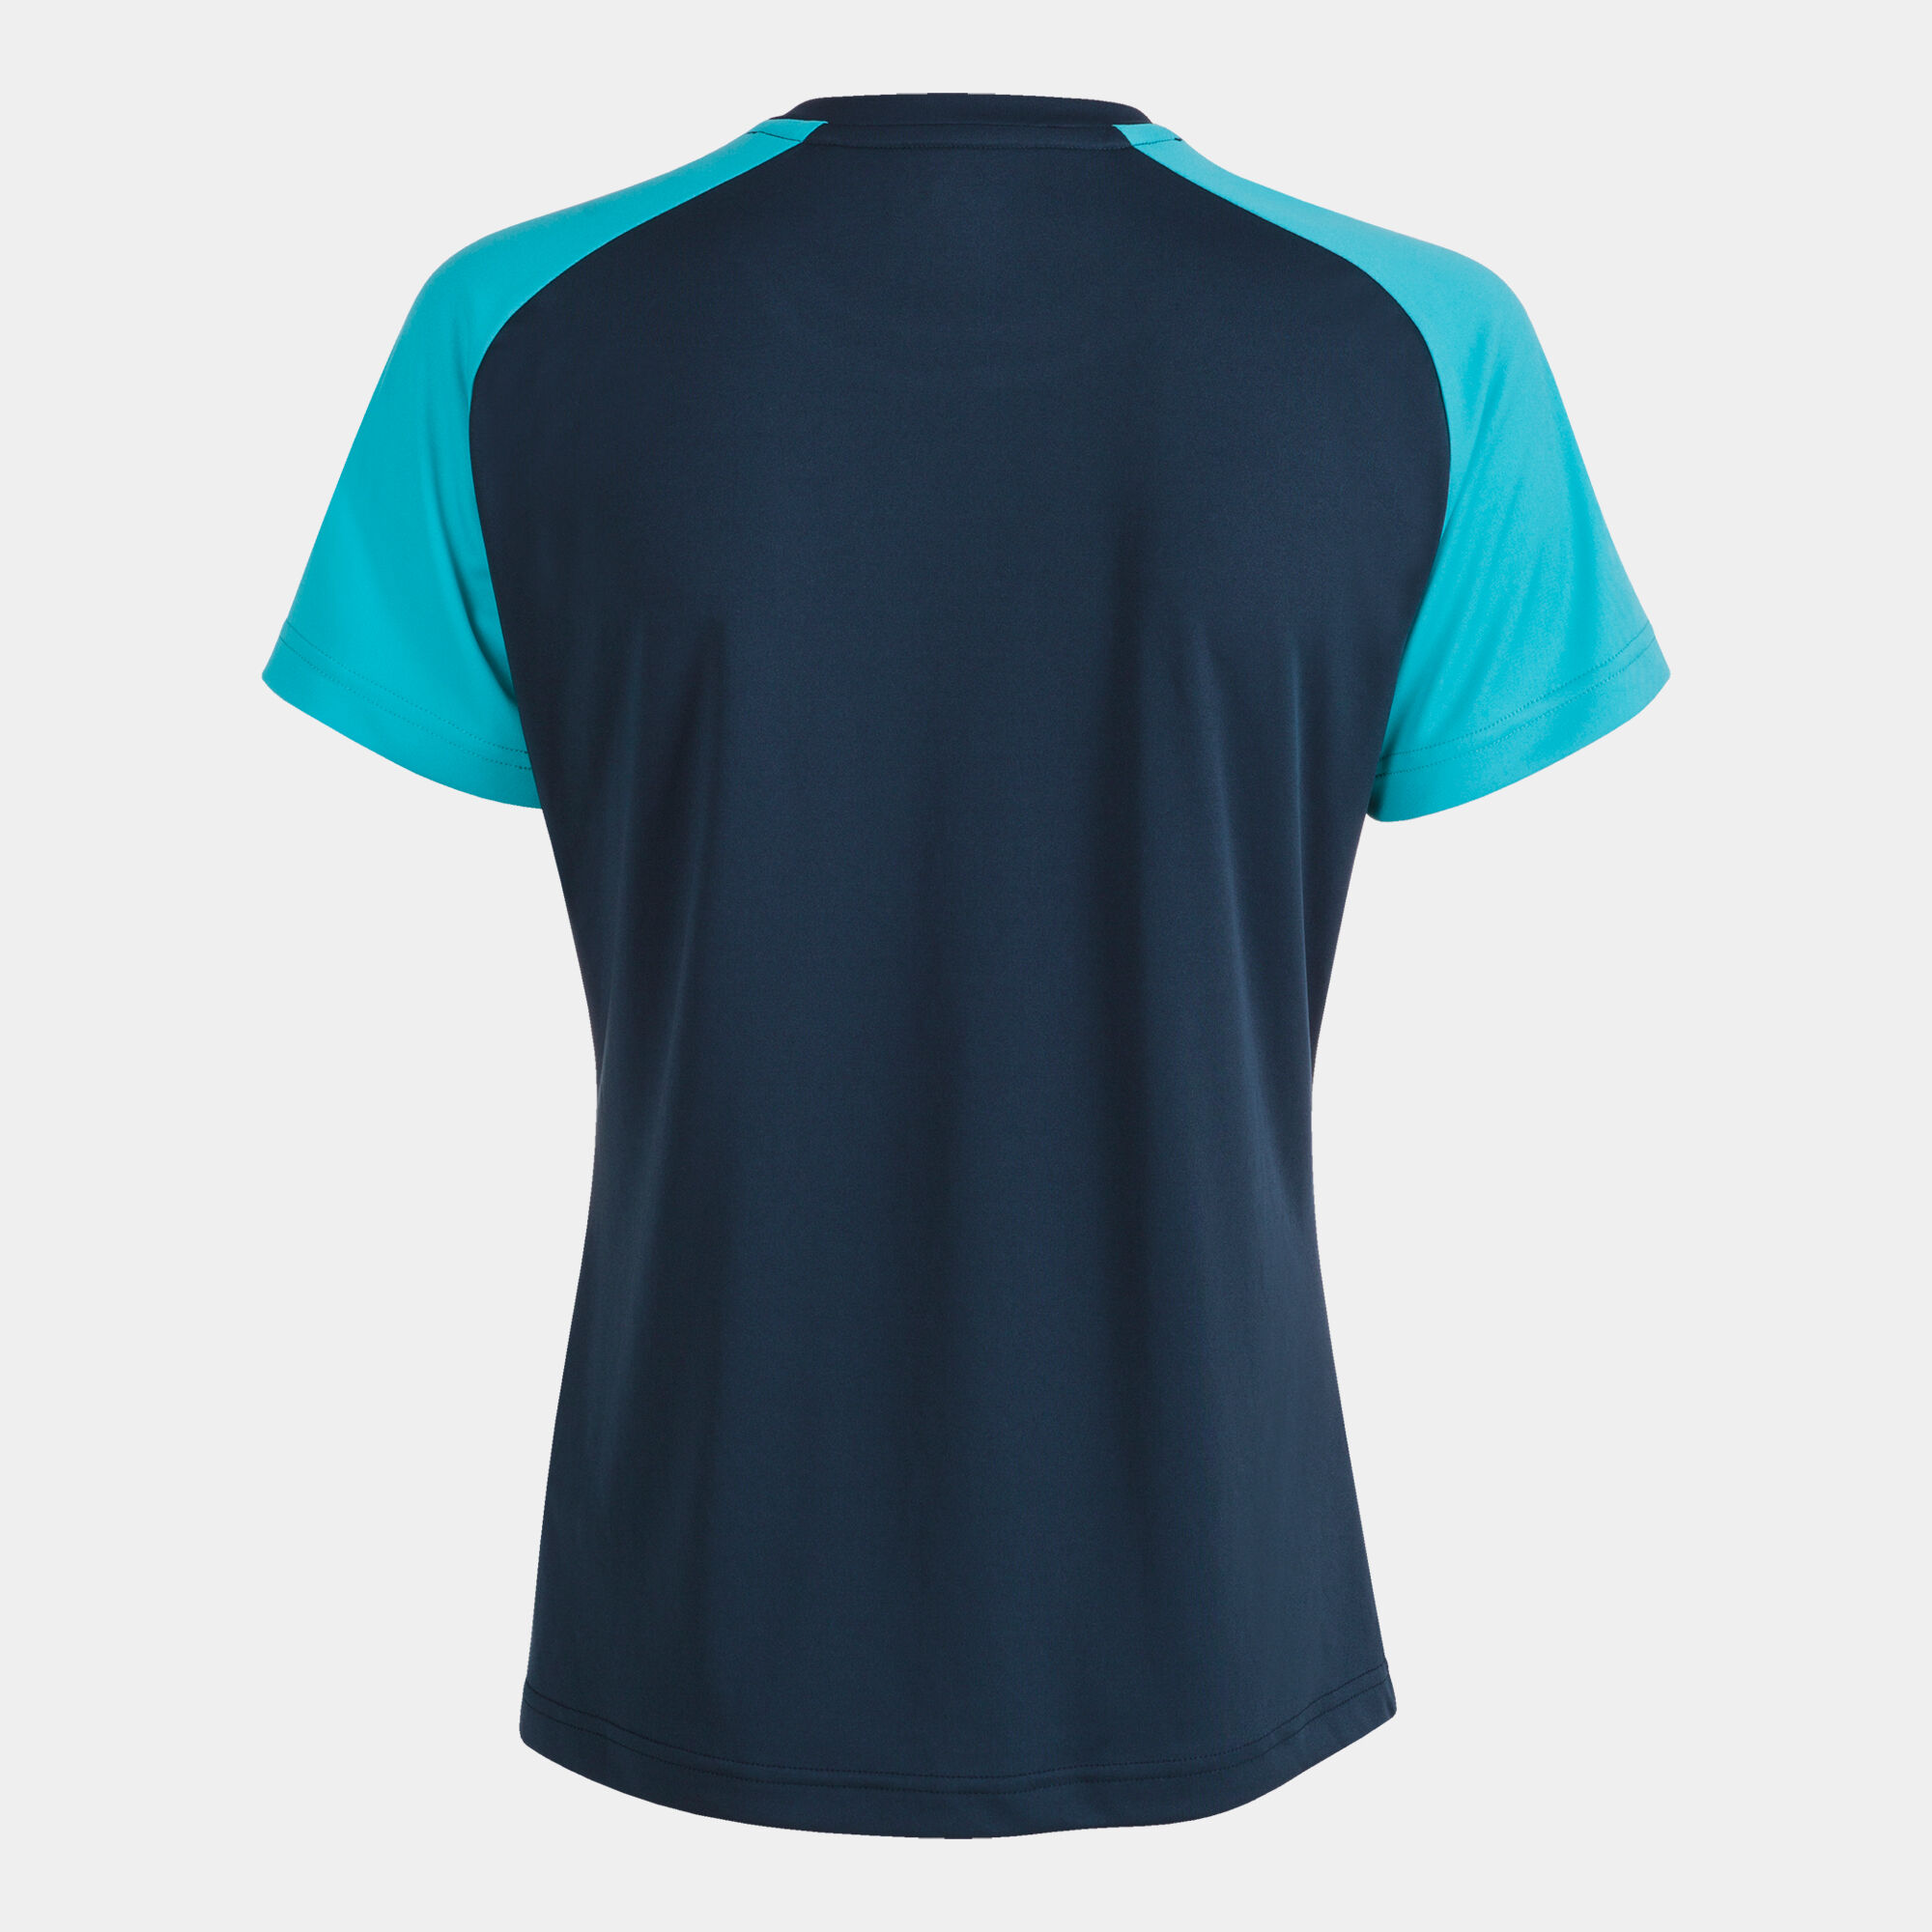 Camiseta manga corta mujer Academy IV marino turquesa flúor